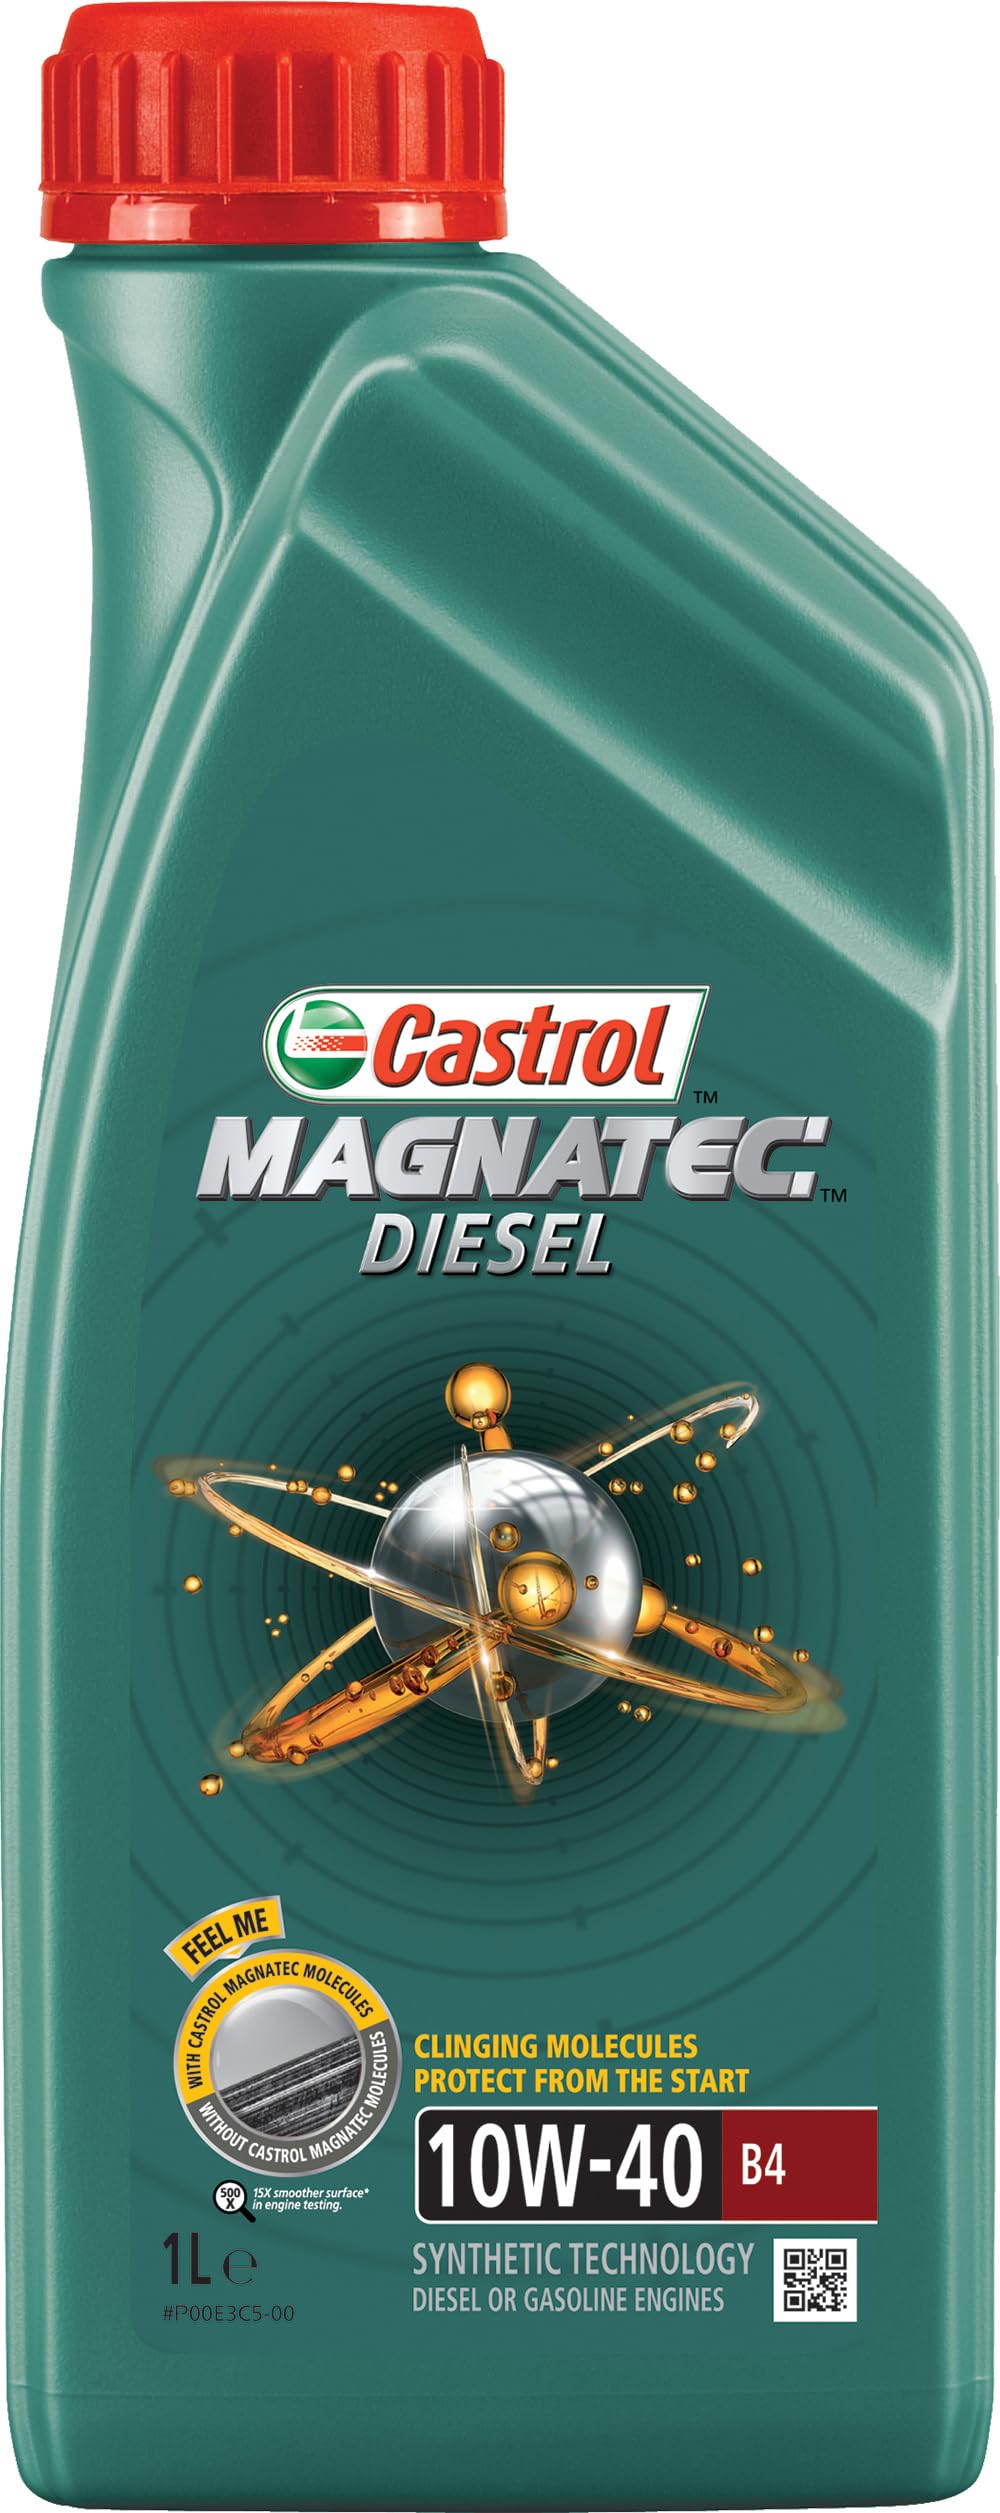 Castrol 151B5F Magnatec Diesel 10W-40 B4 1L von Castrol